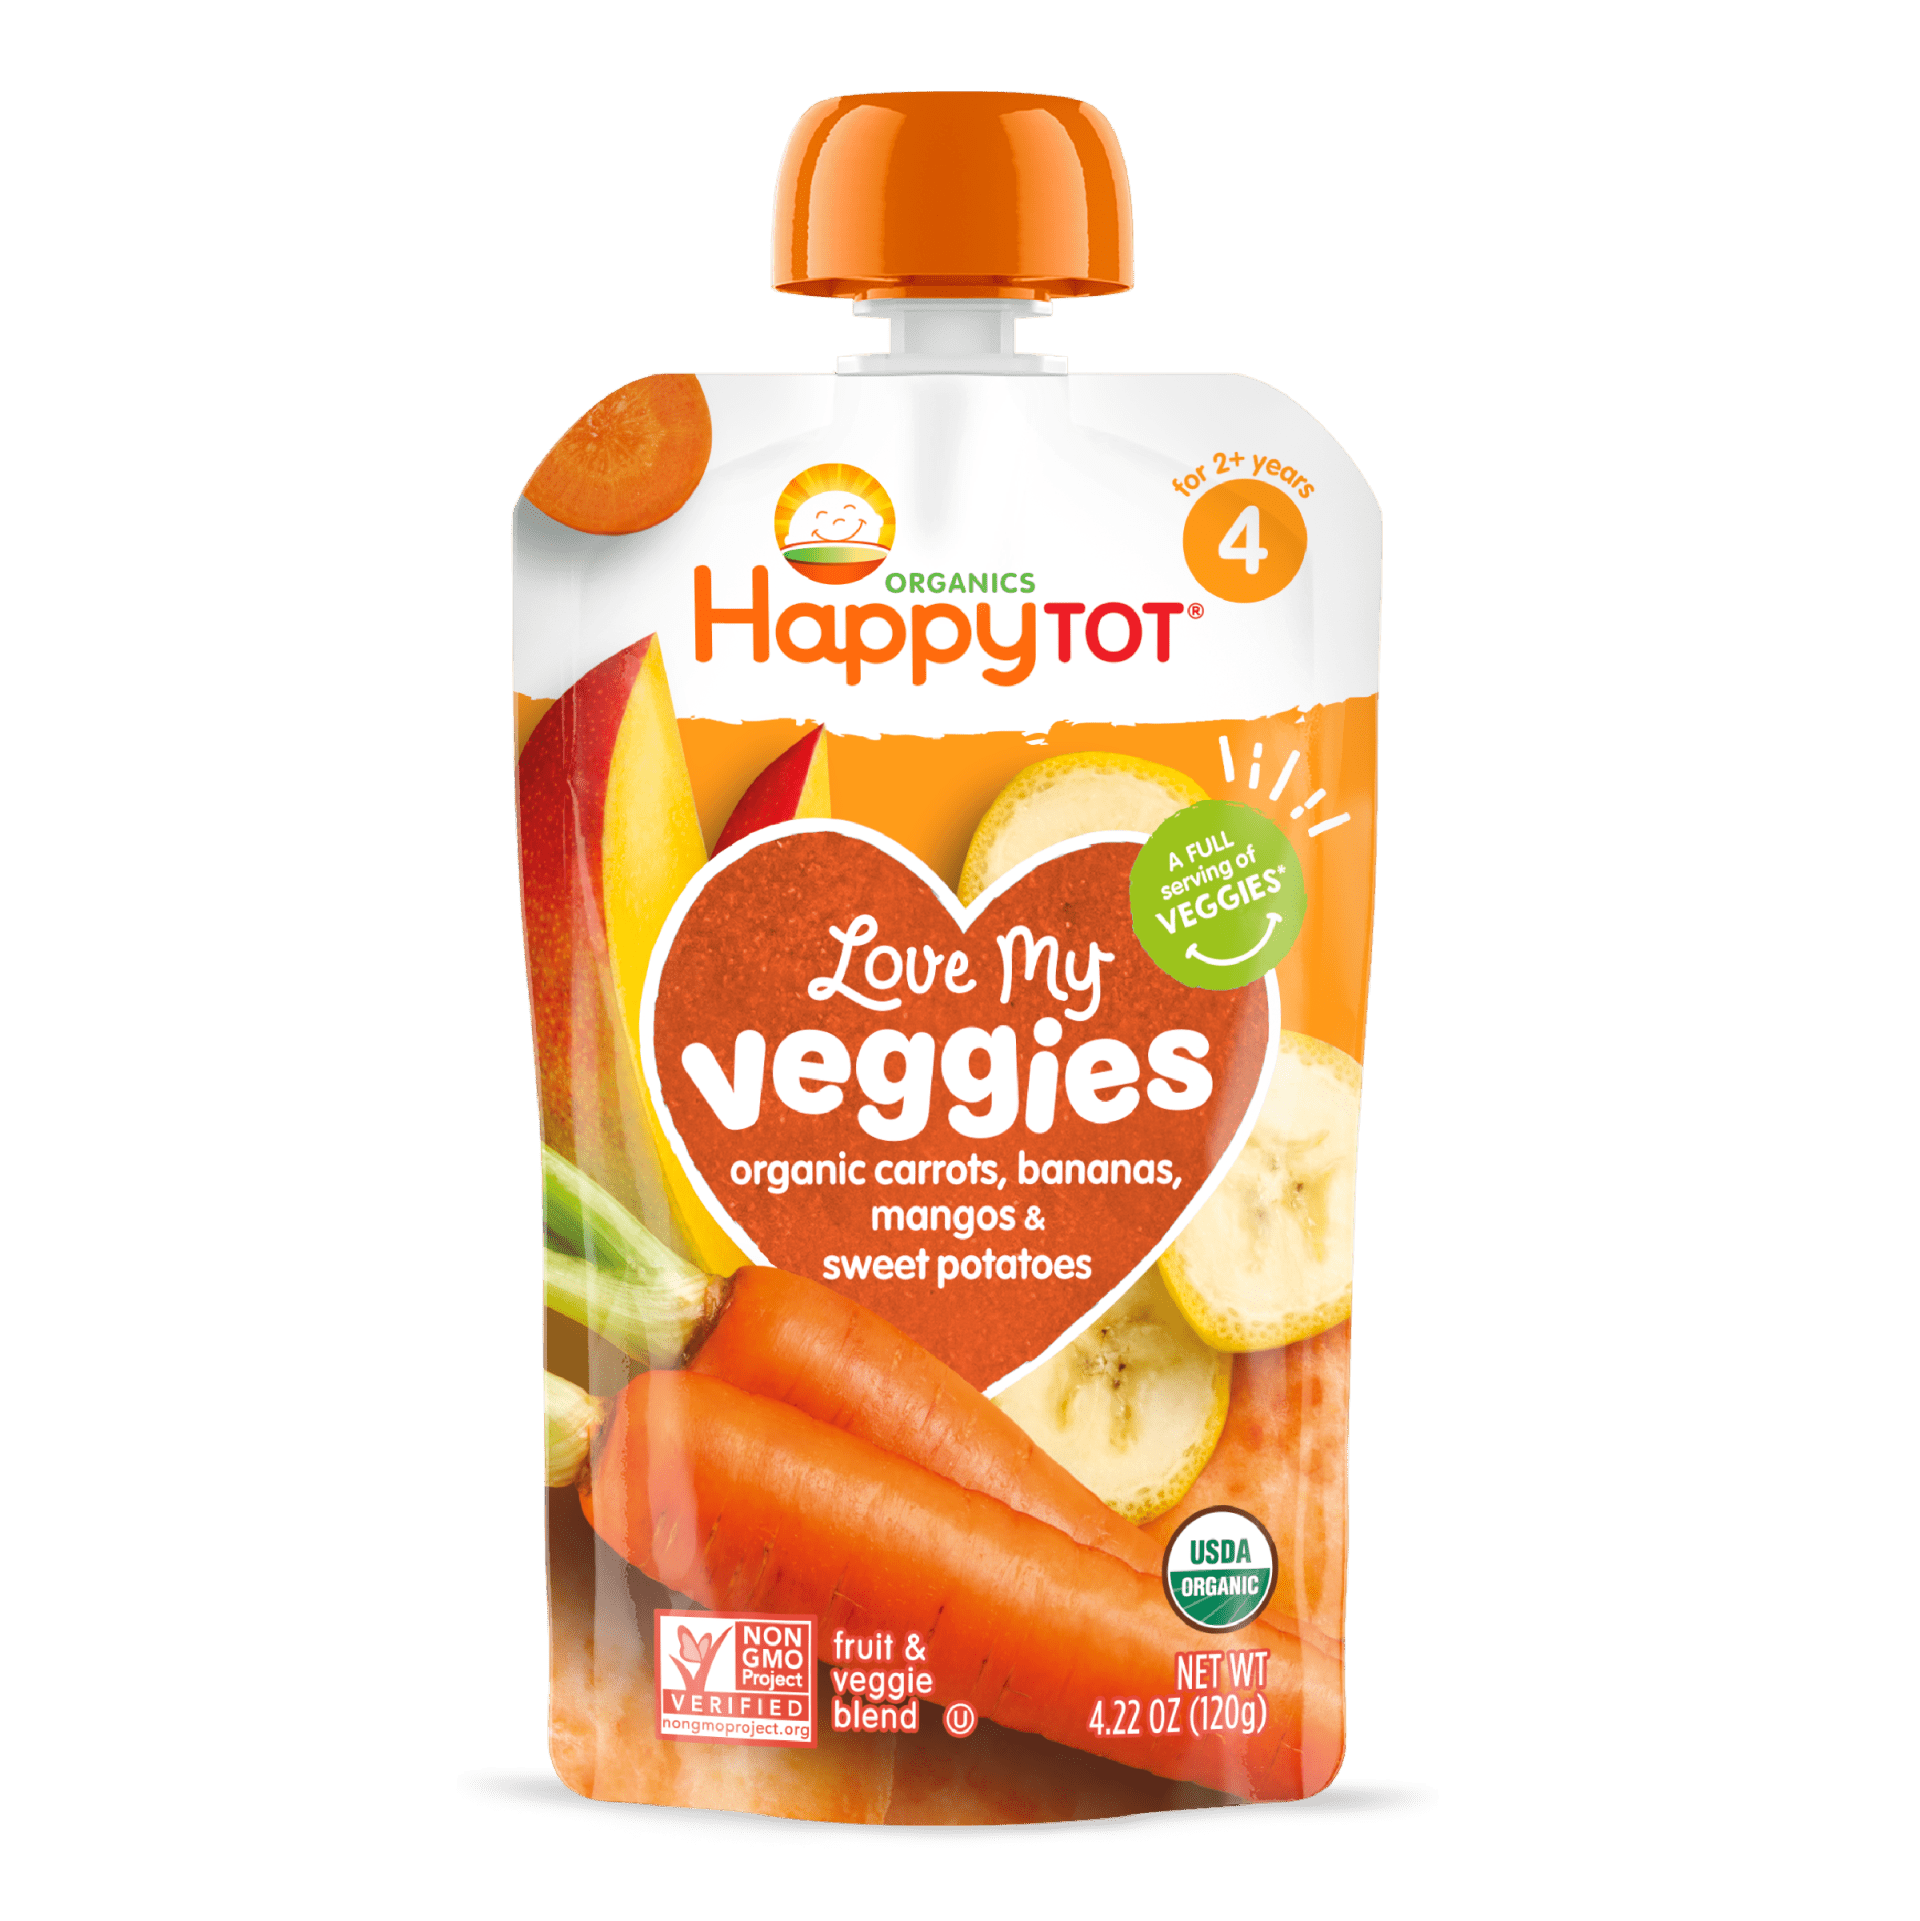 Happy Tot S4 - Veggie & Fruit Blend, Carrots, Bananas, Mangos & Sweet Potatoes 4.2Oz pouch 16 units per case 4.2 oz